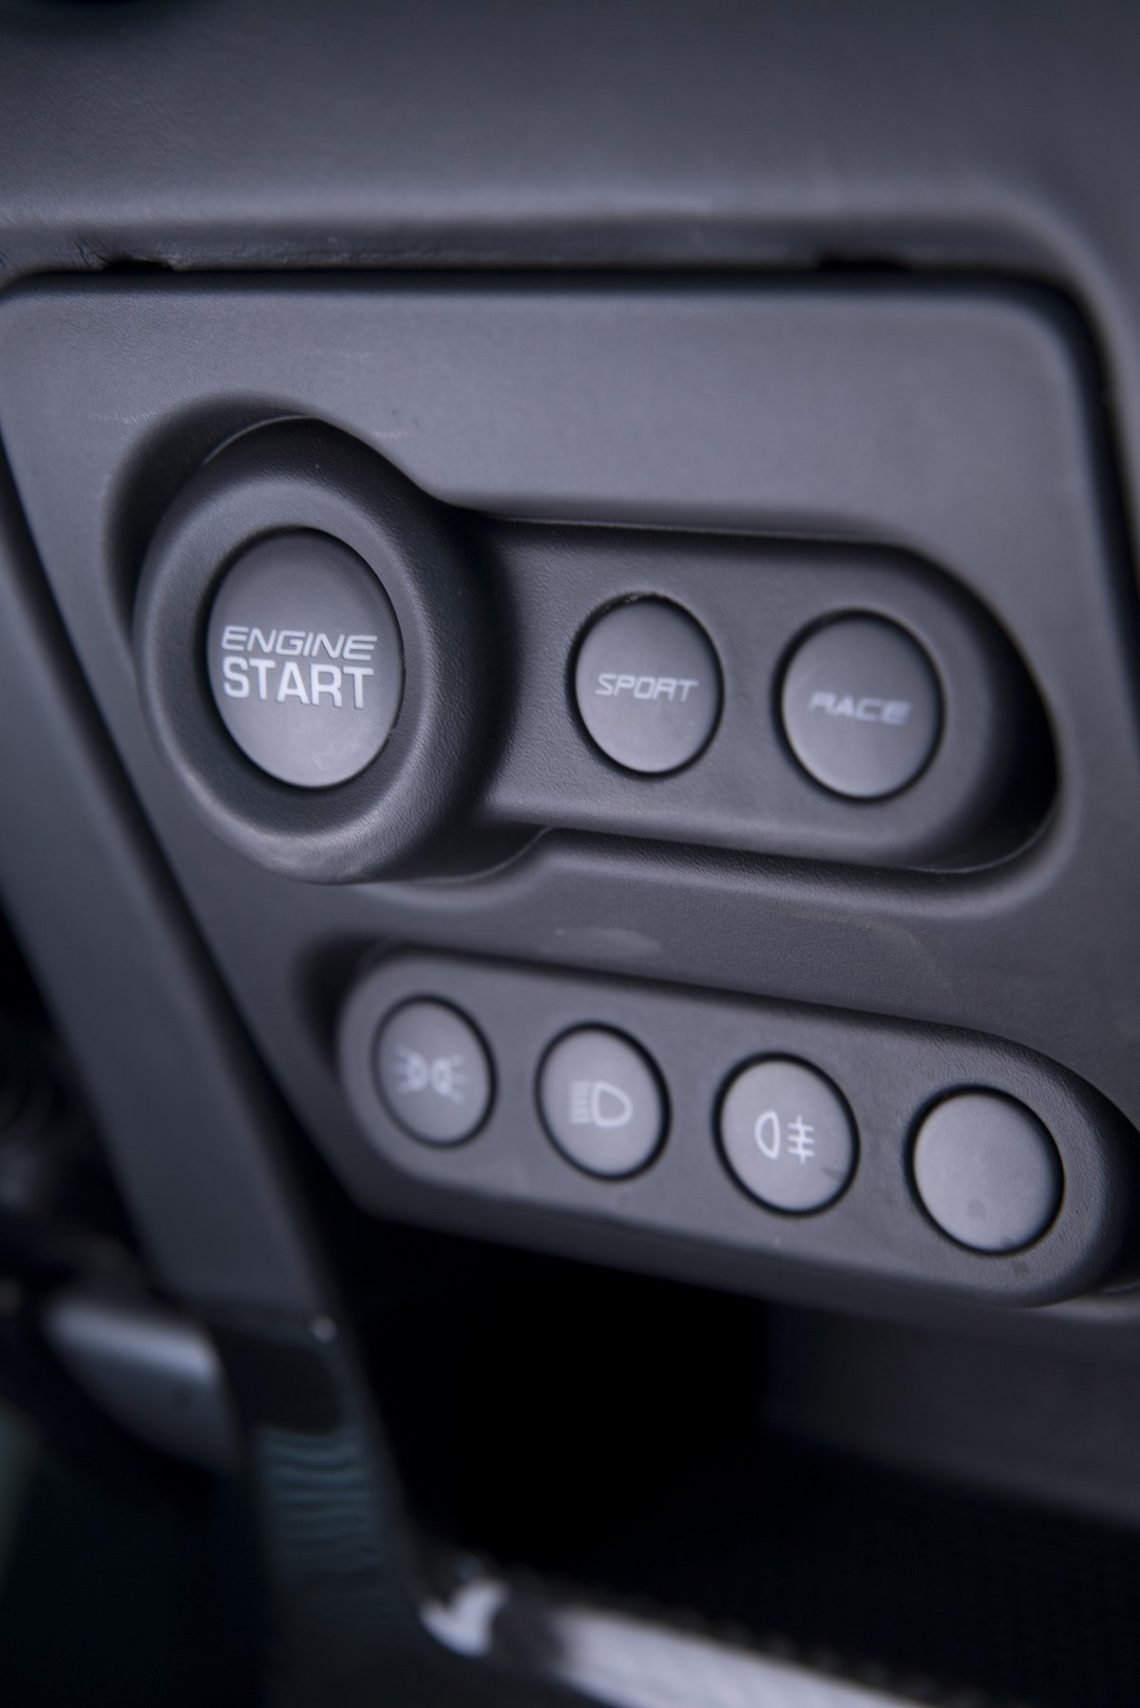 Drive Mode Fahrmodus Einstellung Setup Button Engine Start Sport Race Scheinwerfer